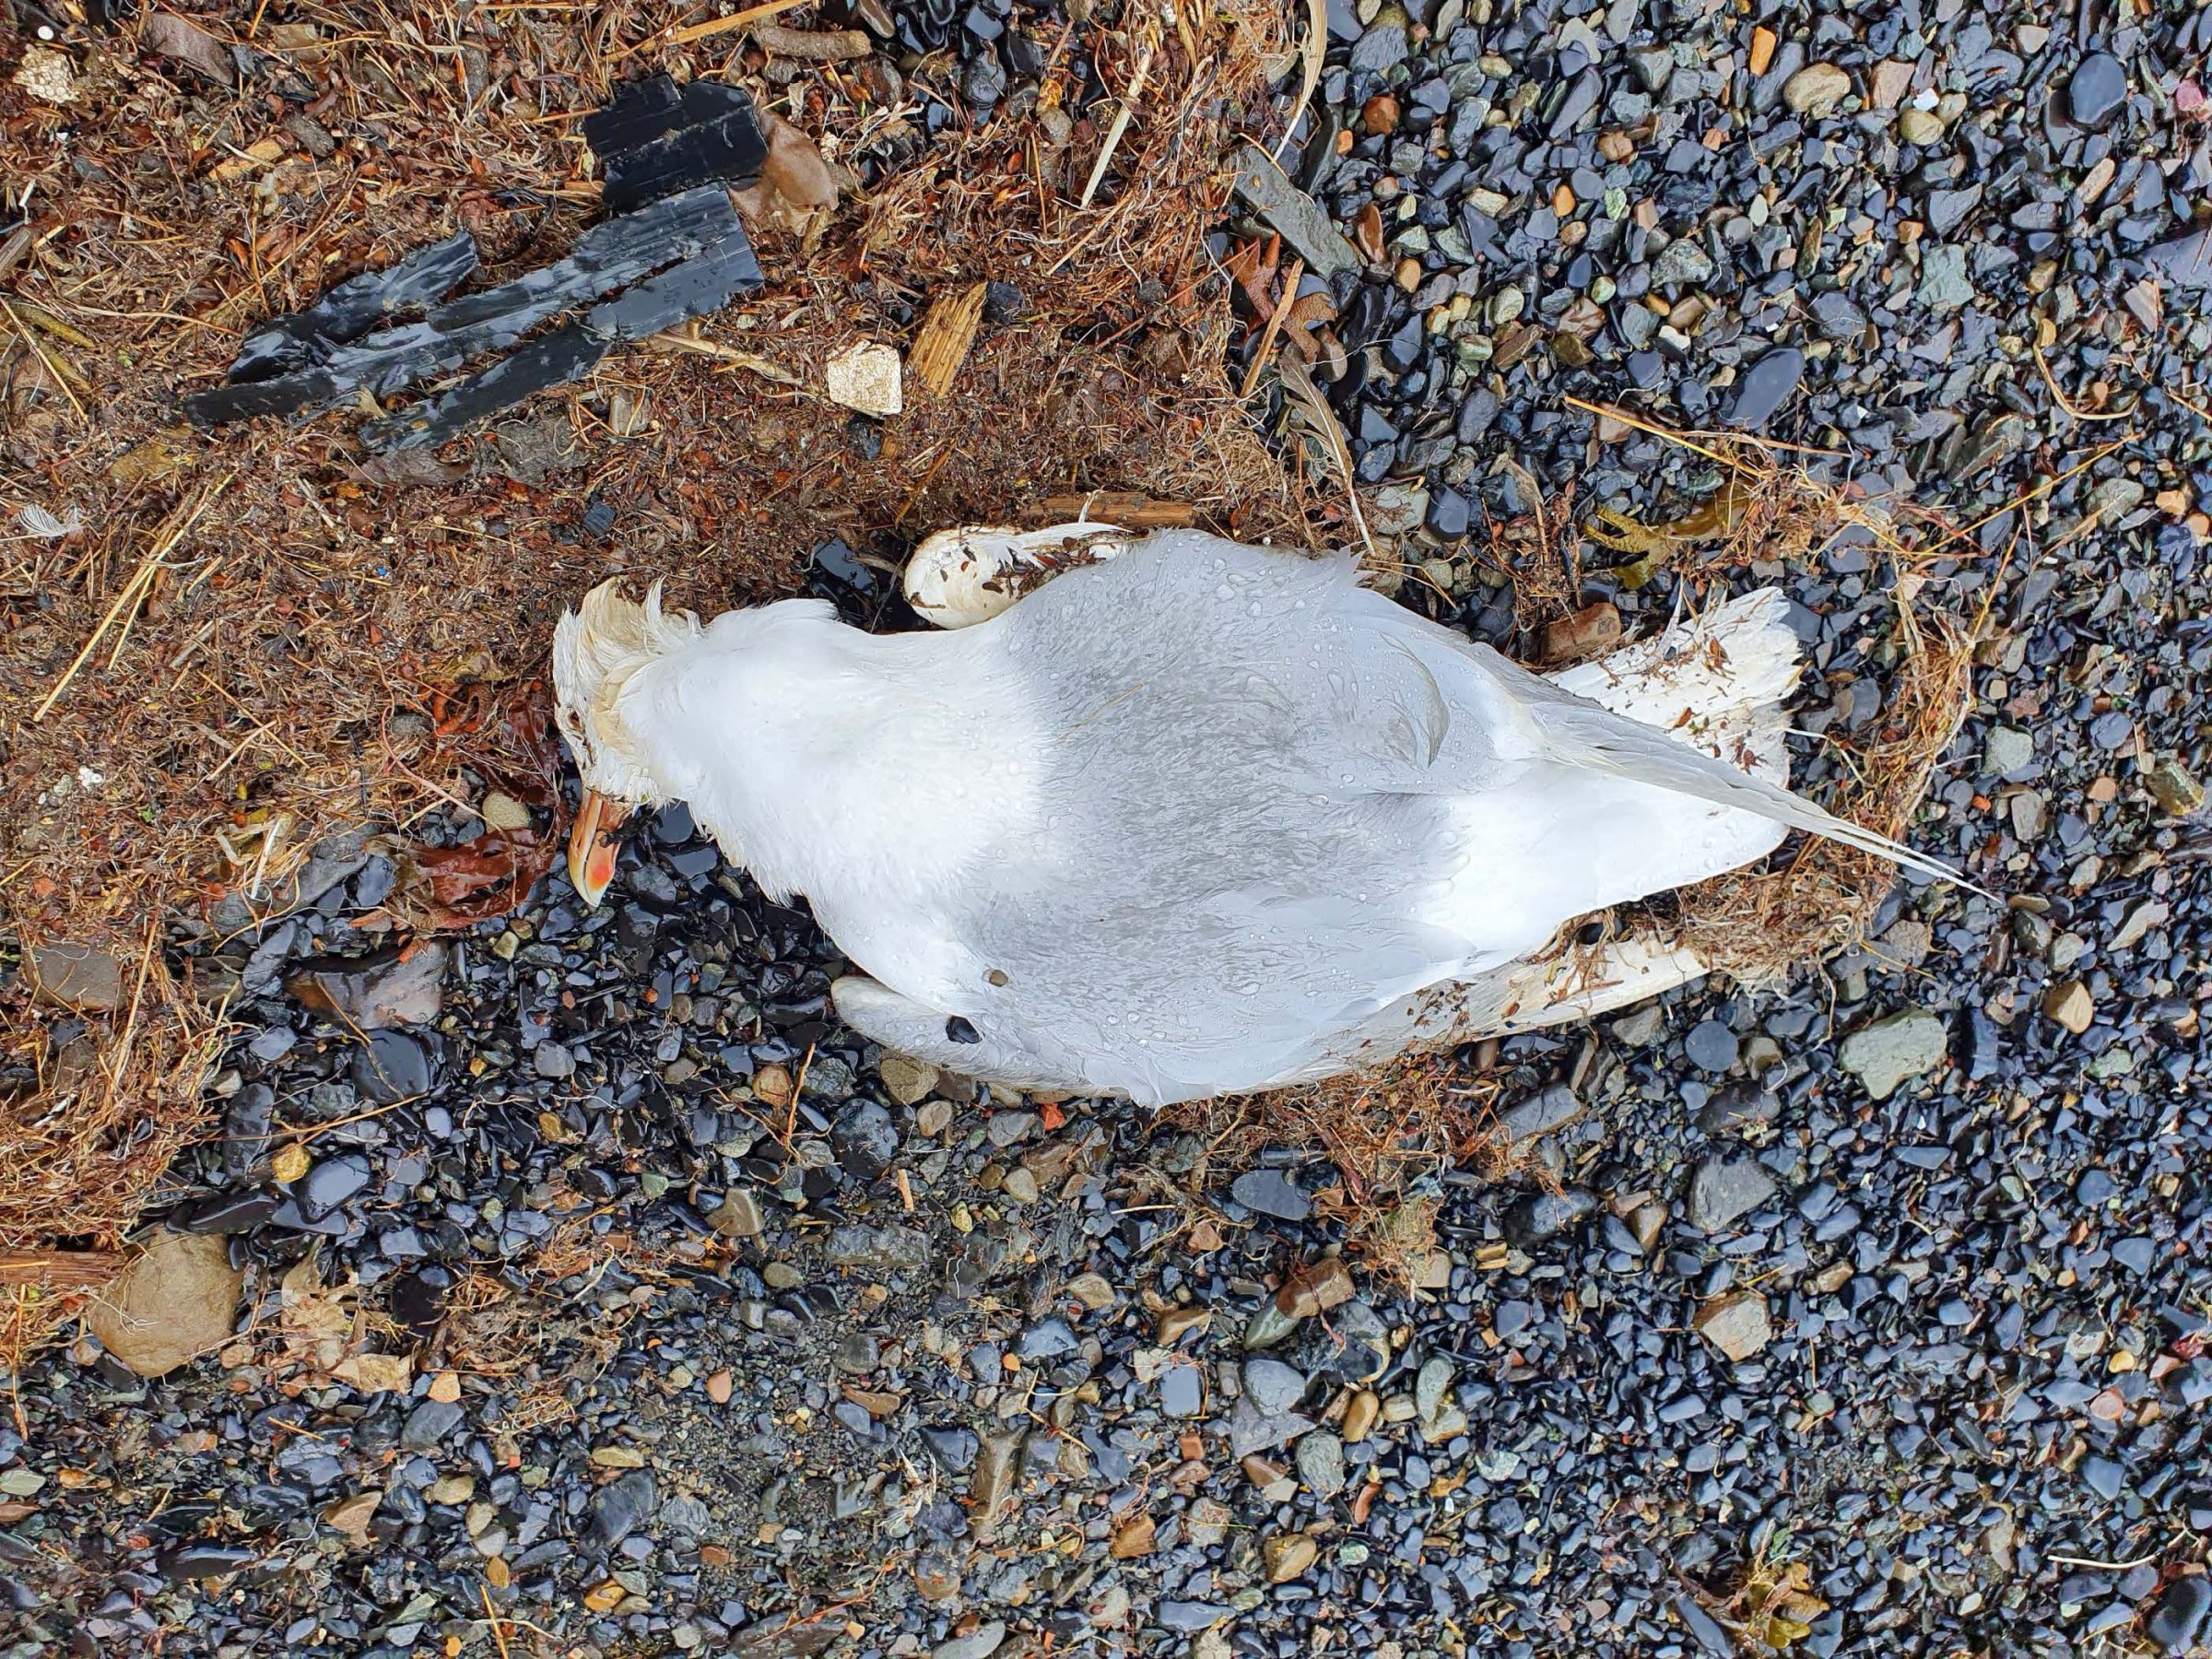 The glaucous gull was found dead in Longyearbyen. Photo: Anita Rude